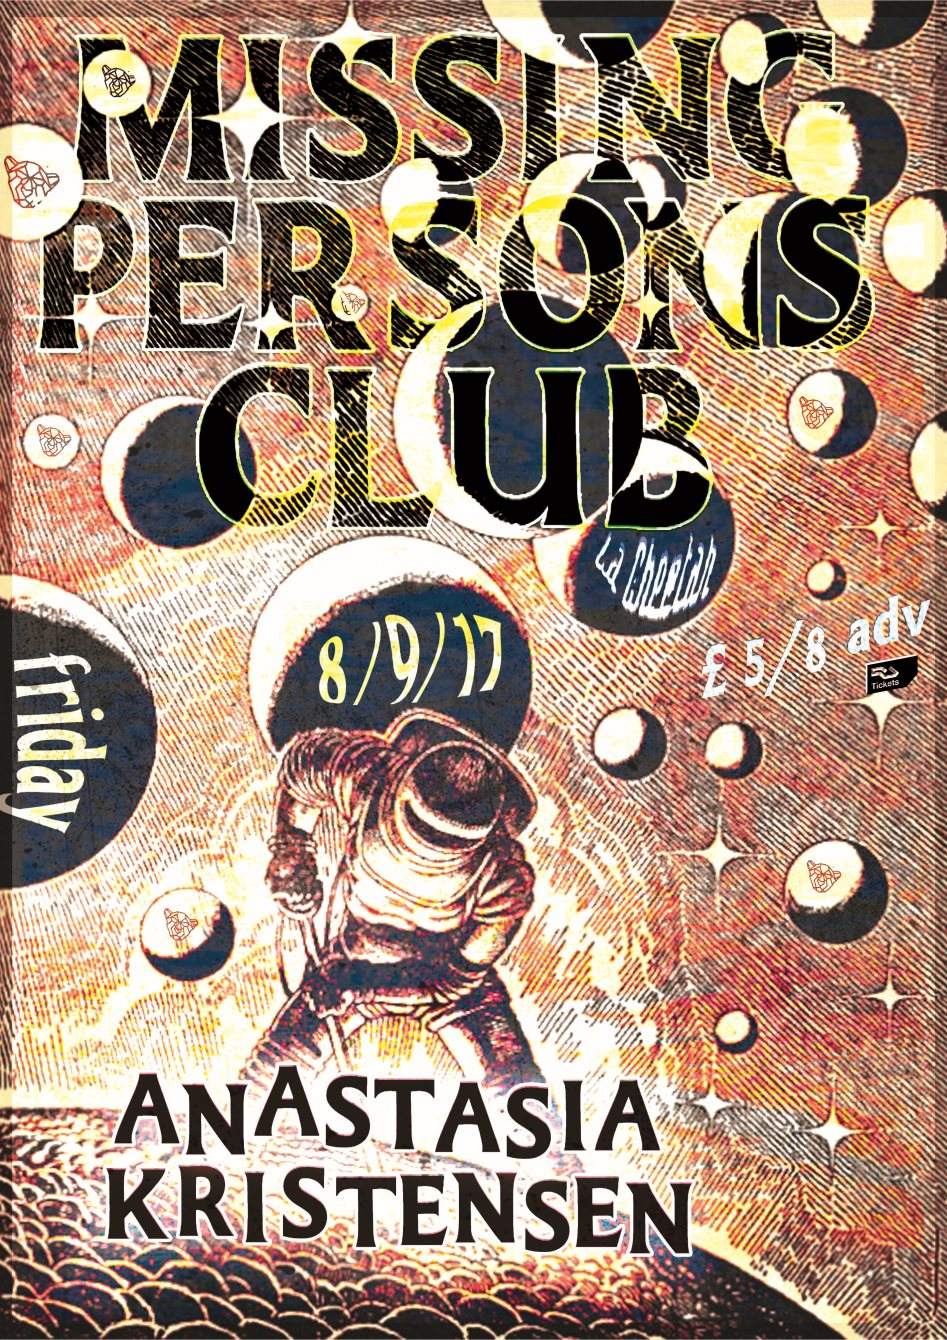 Missing Persons Club presents: Anastasia Kristensen - Página frontal